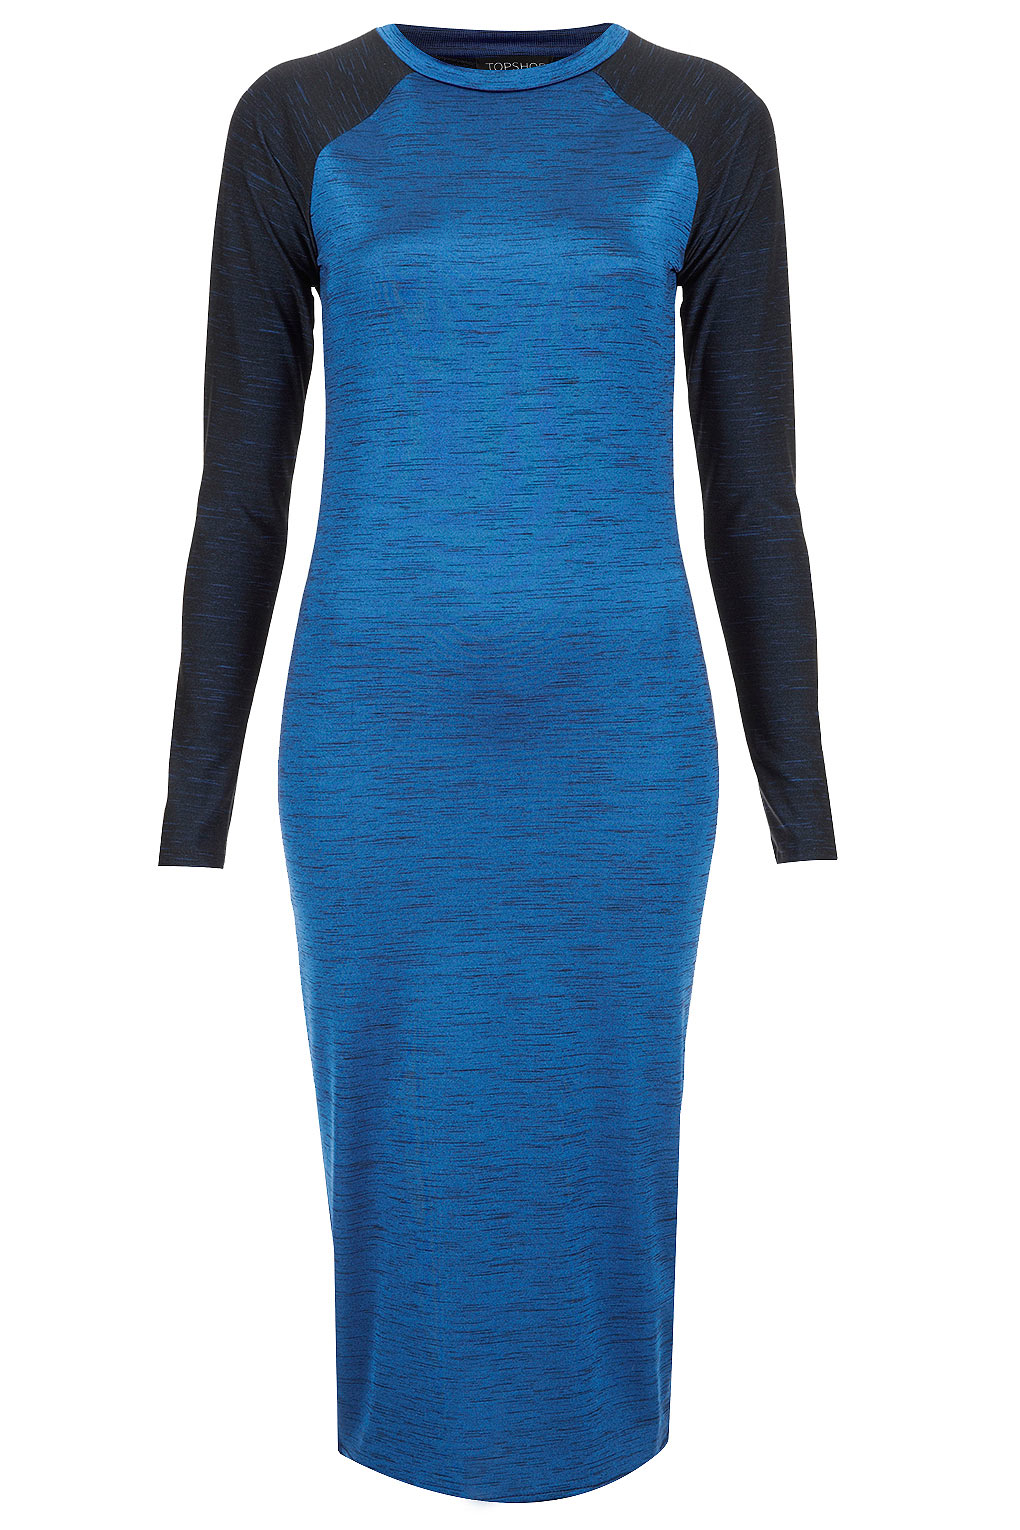 Topshop Space Dye Raglan Bodycon Dress in Blue | Lyst